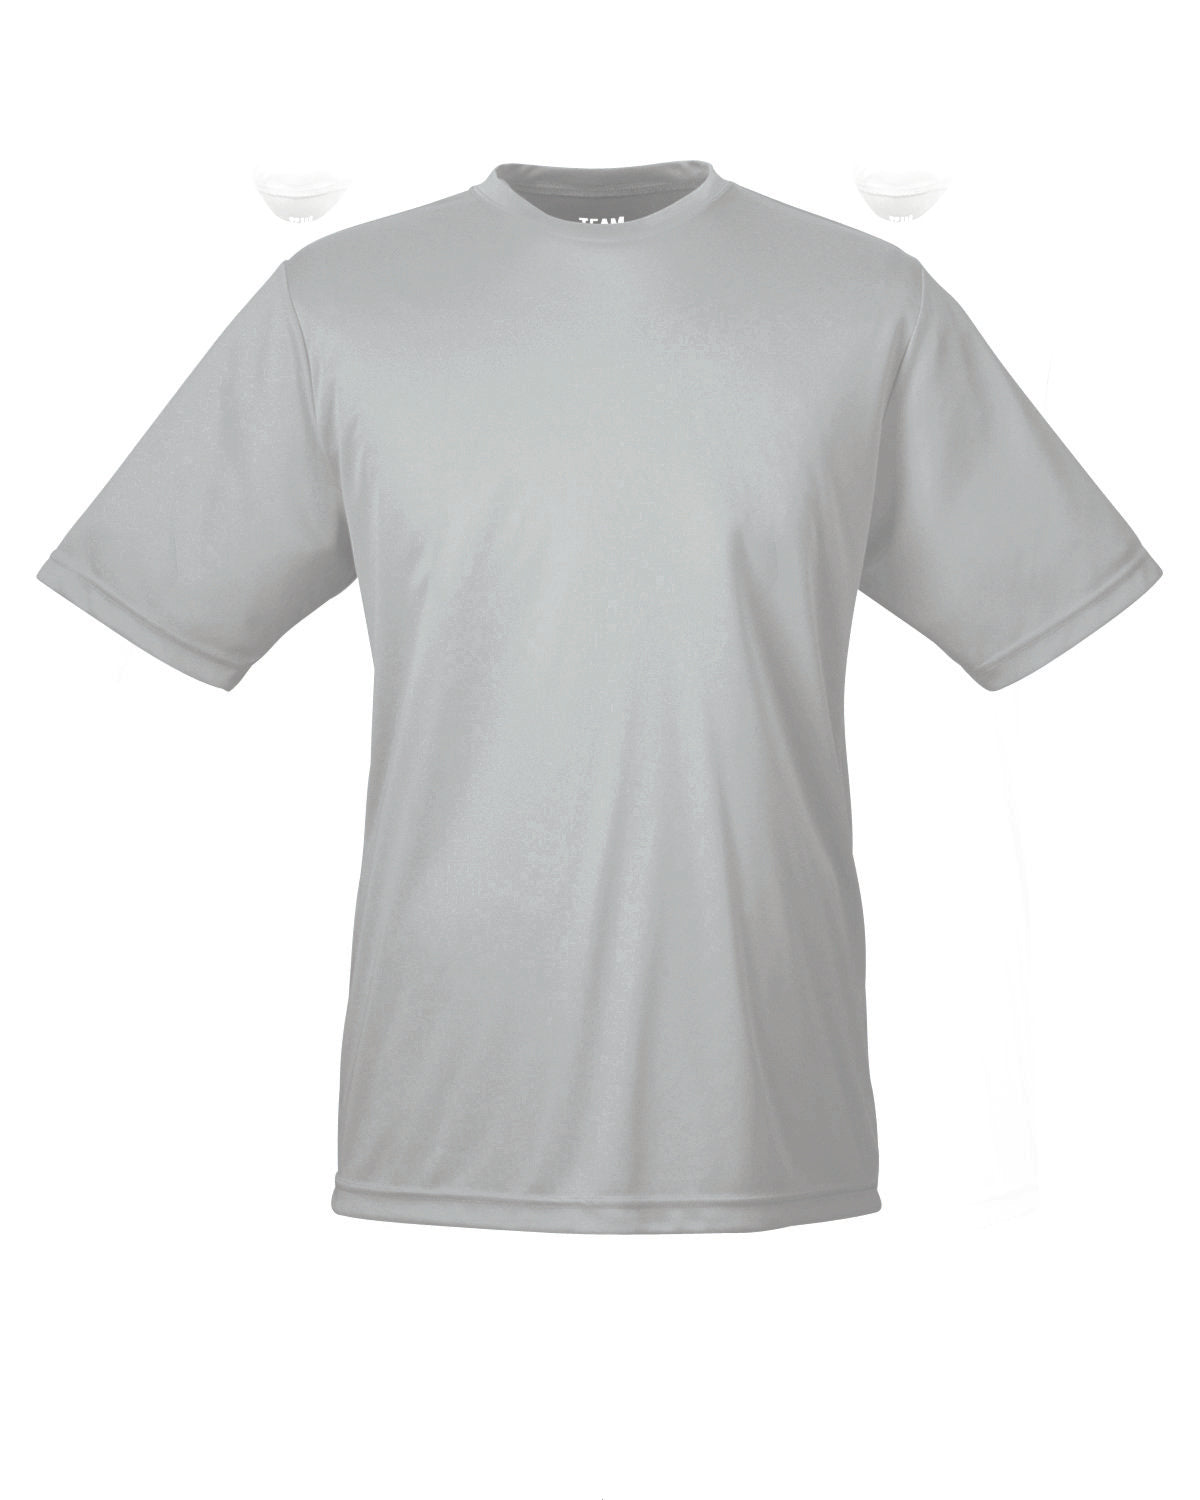 Test Dryfit Shirt